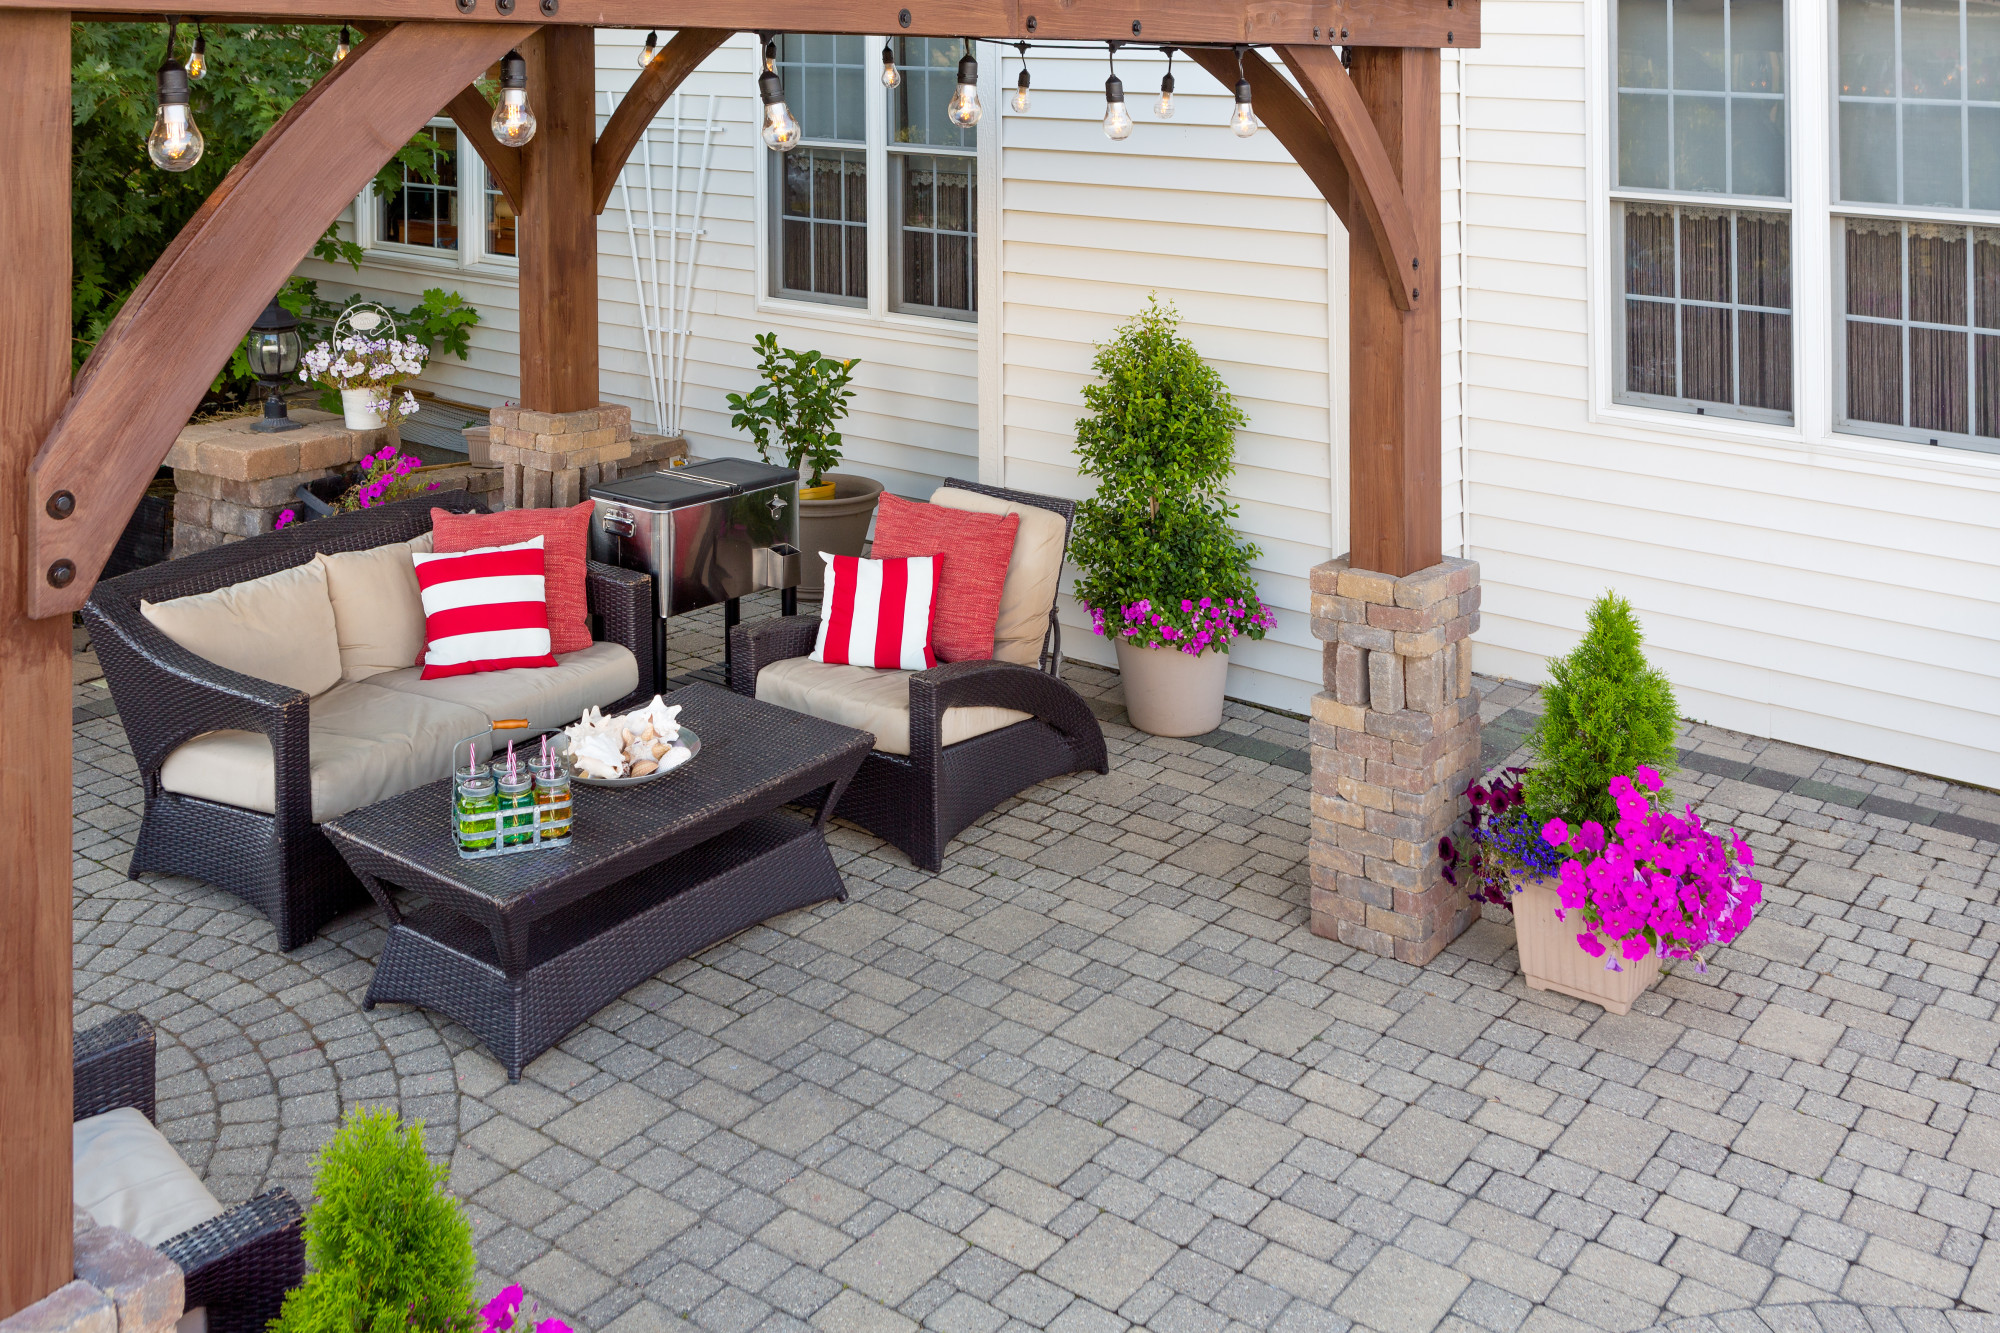 Create Your Own Beautiful Backyard Retreat: 5 Picture-Perfect Backyard Design Tips